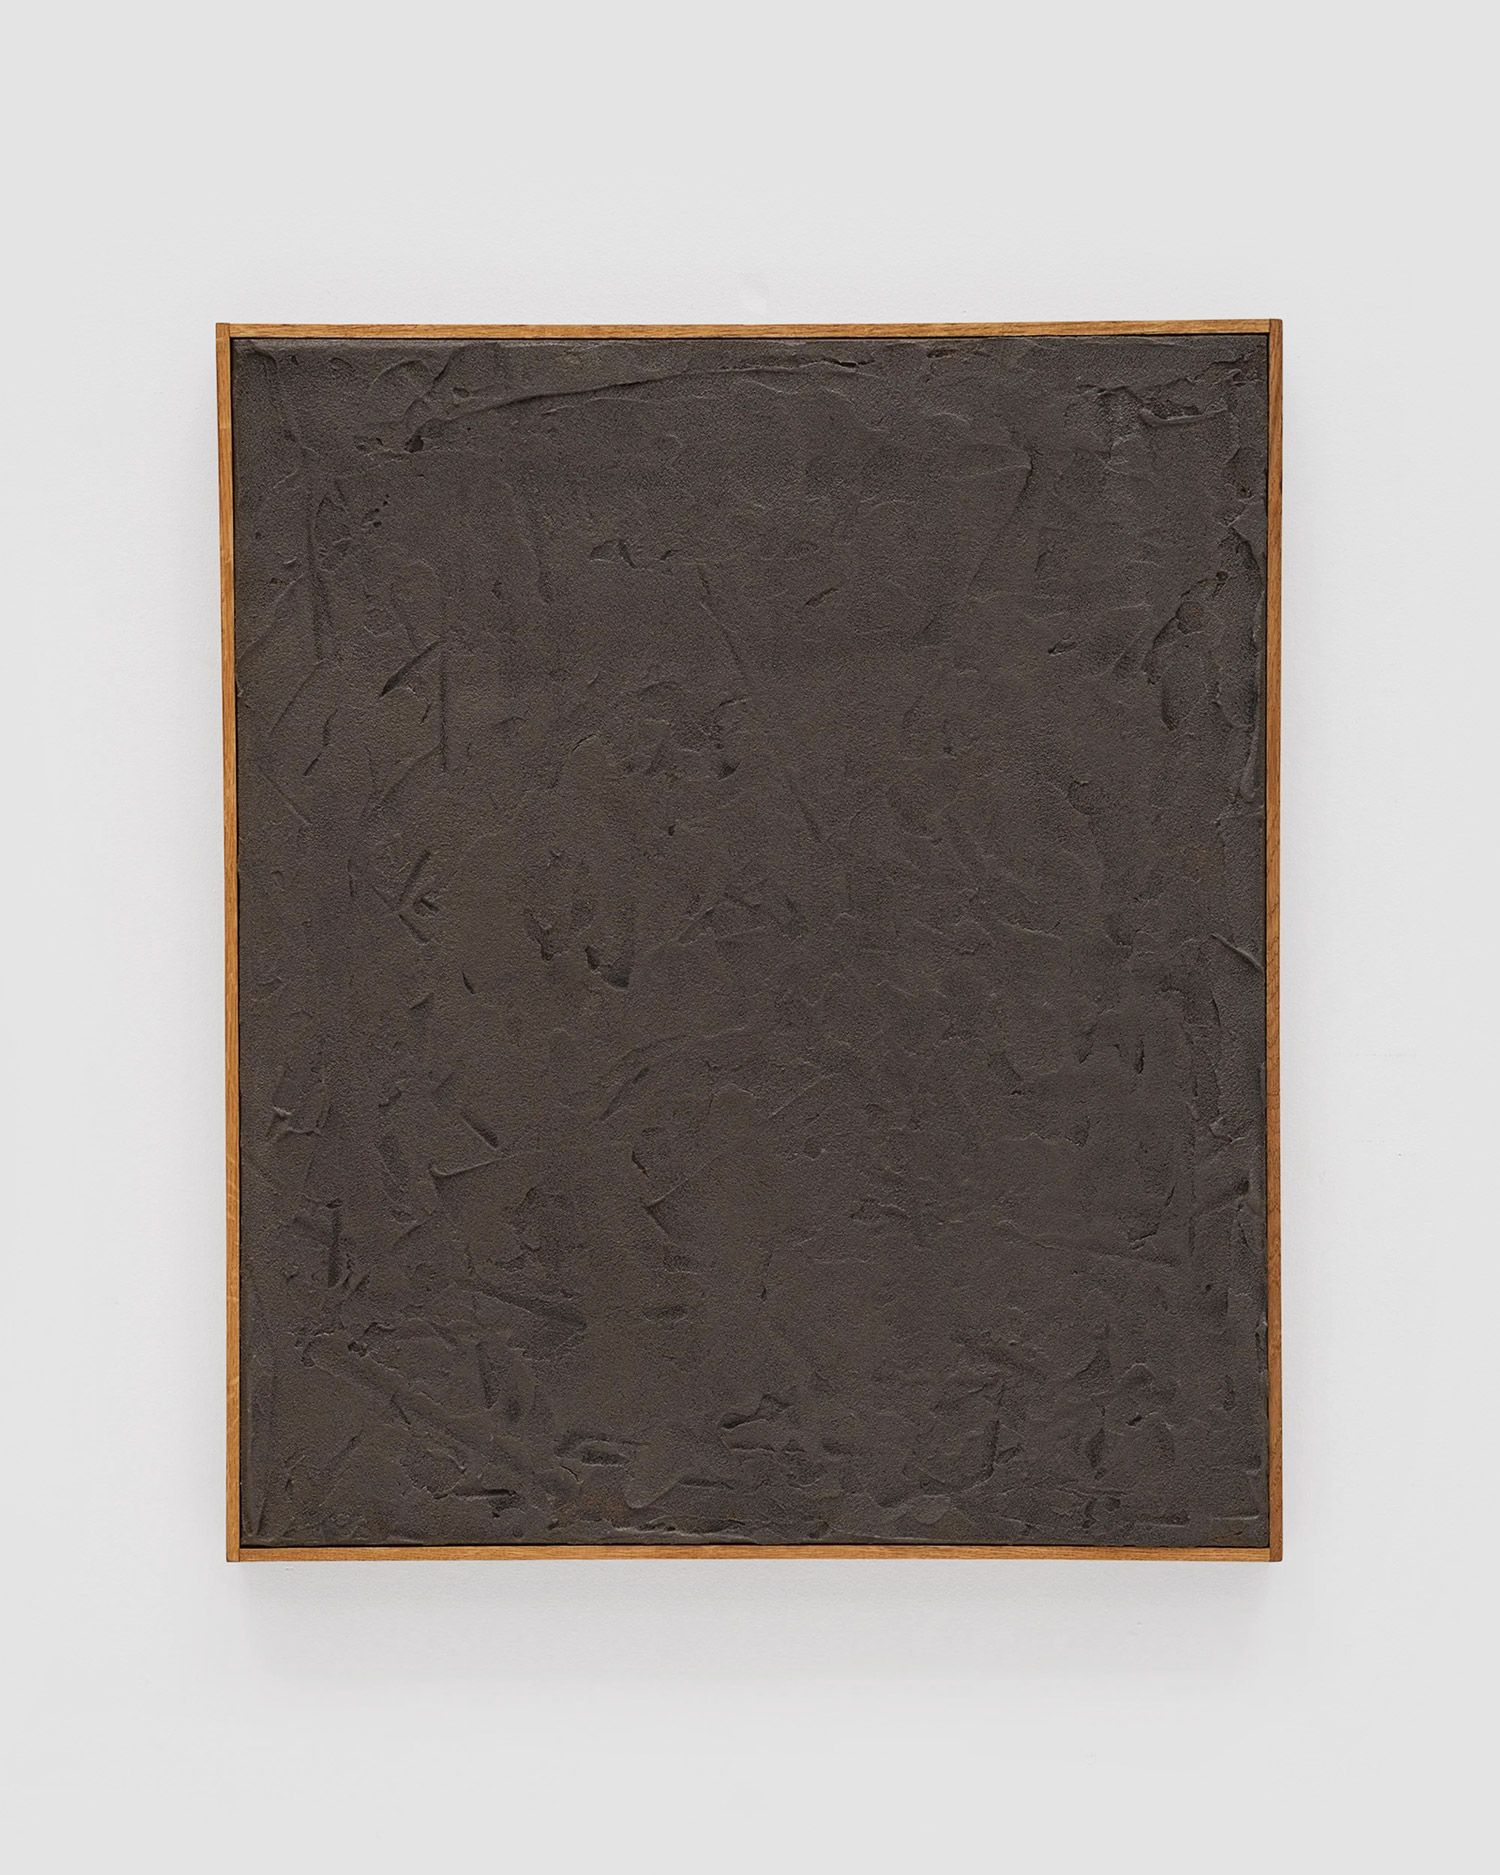 Antonia Ferrer, 22/75 Alquimia gris oscuro, 2022, Mixed media on canvas, 0.84 × 0.72 cm © The Artist, Image Courtesy Alzueta Gallery